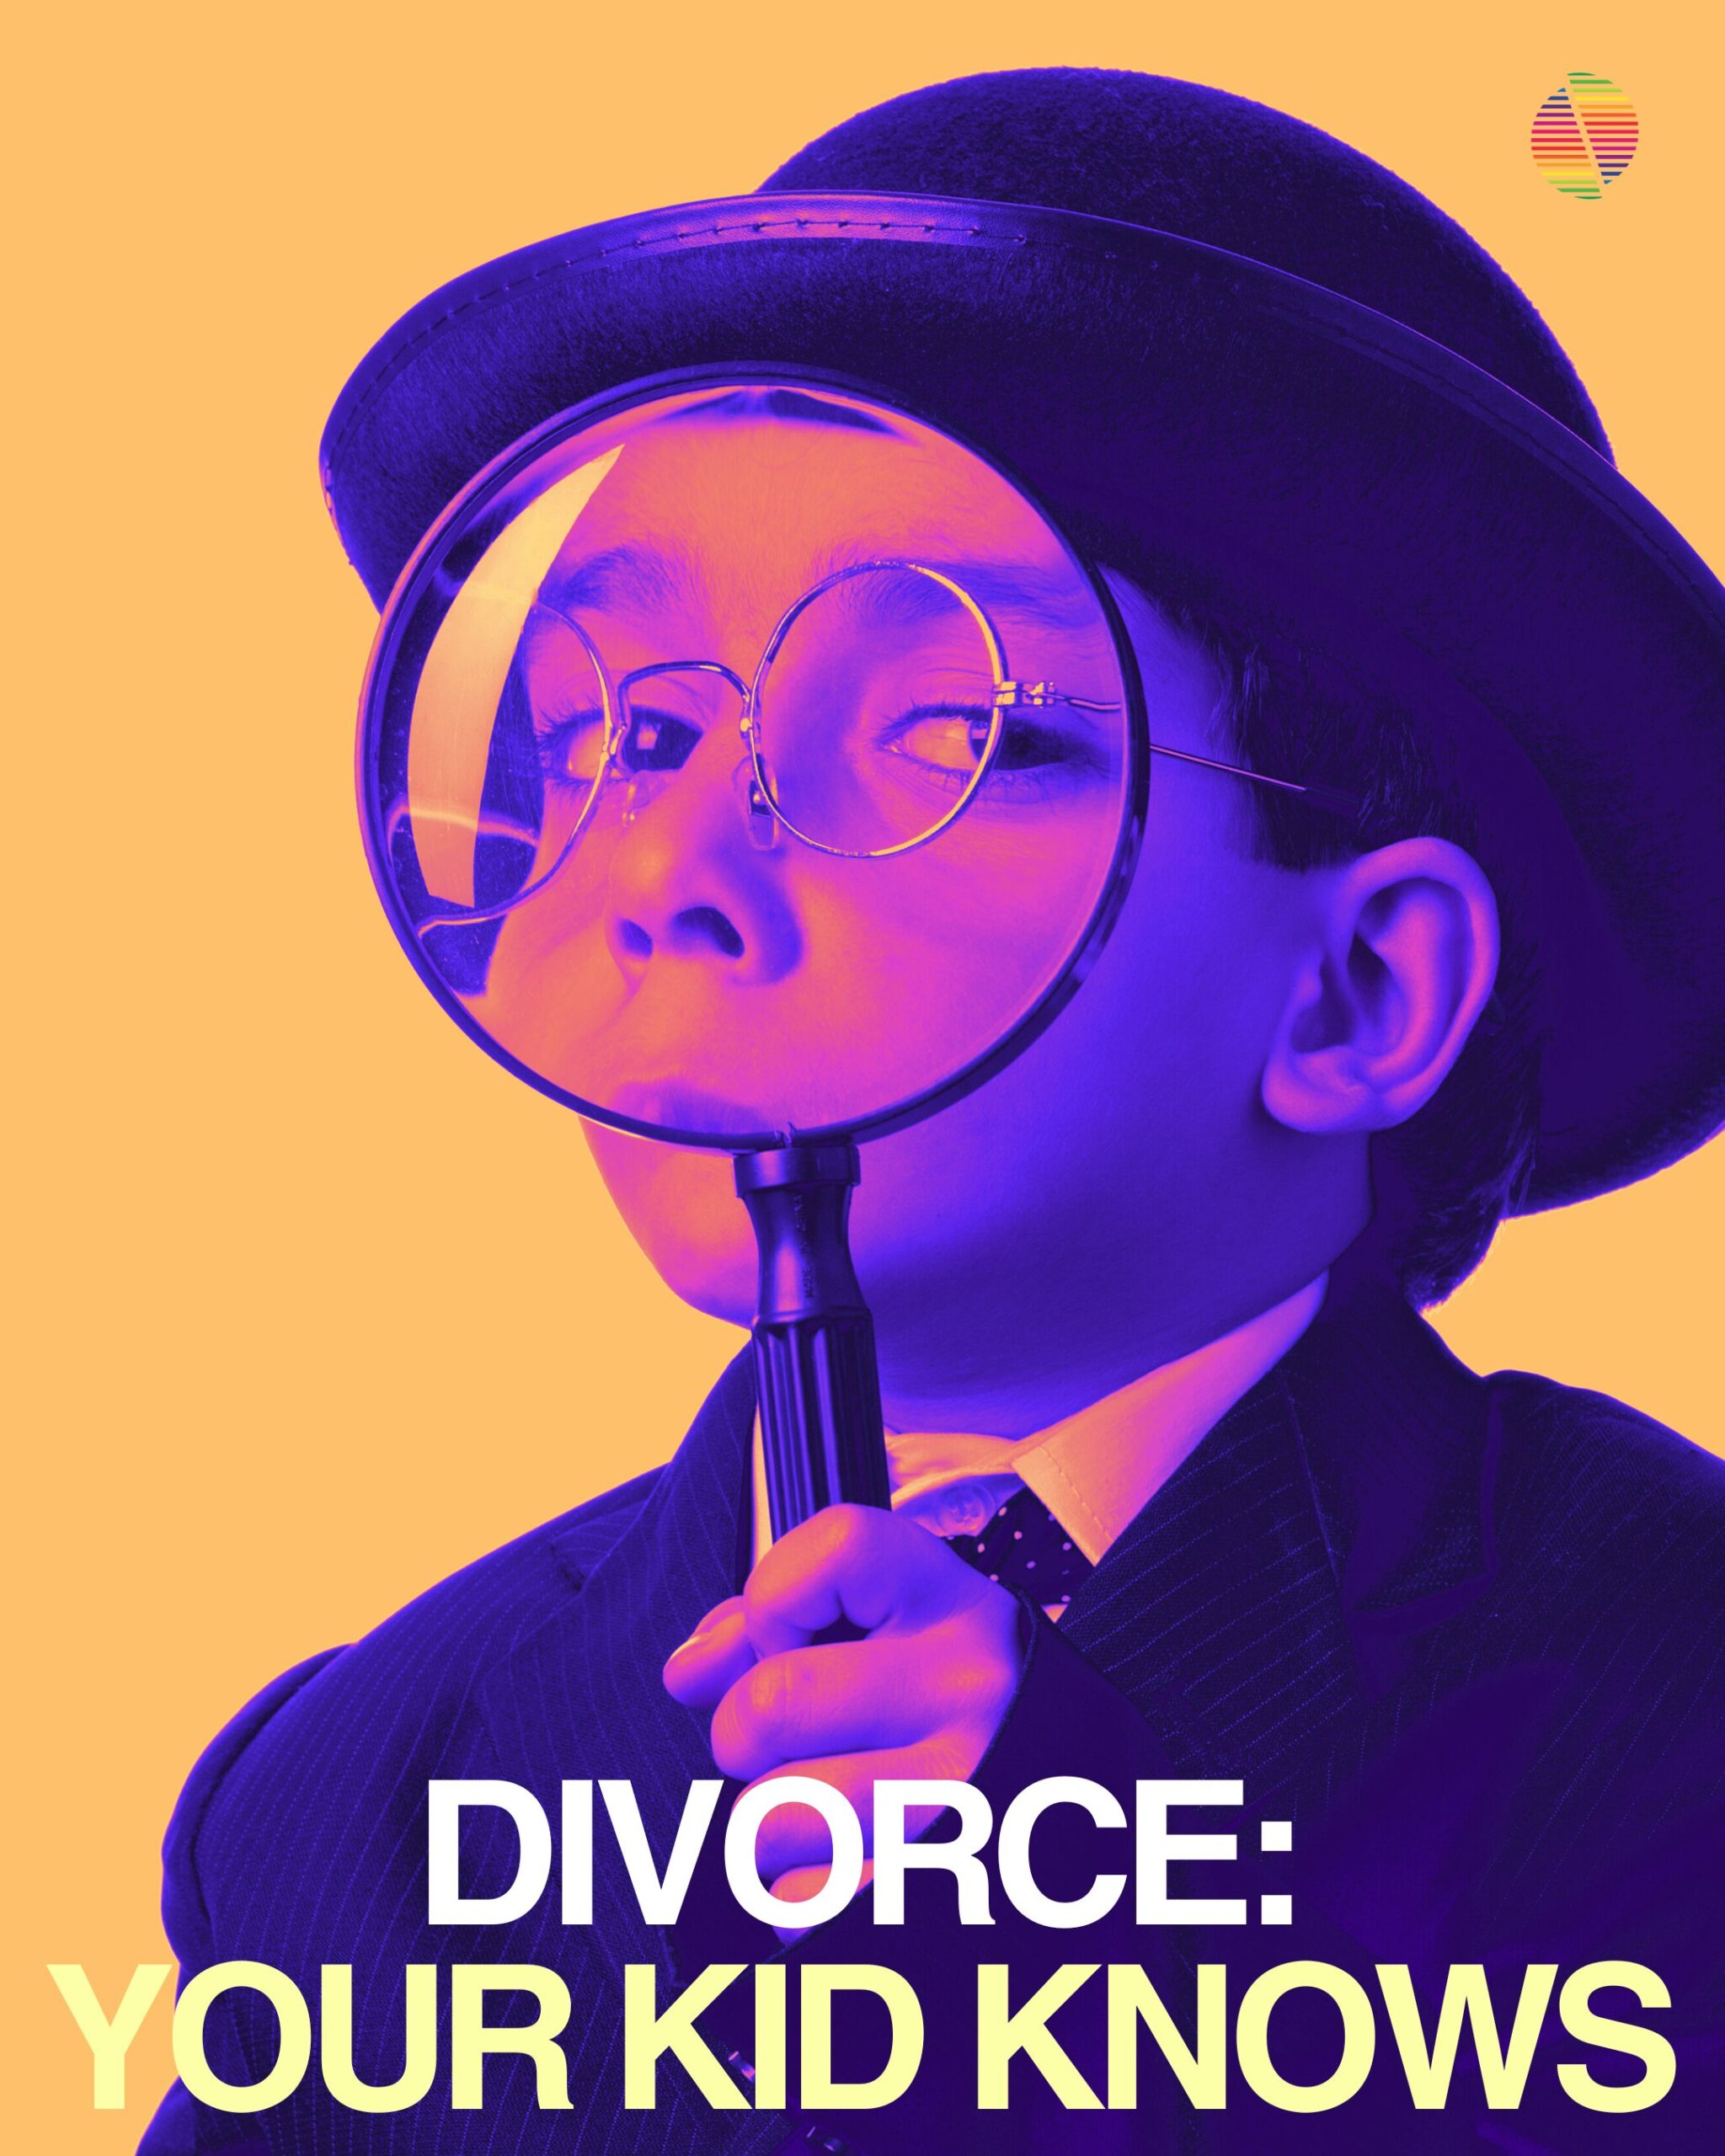 Children in divorce